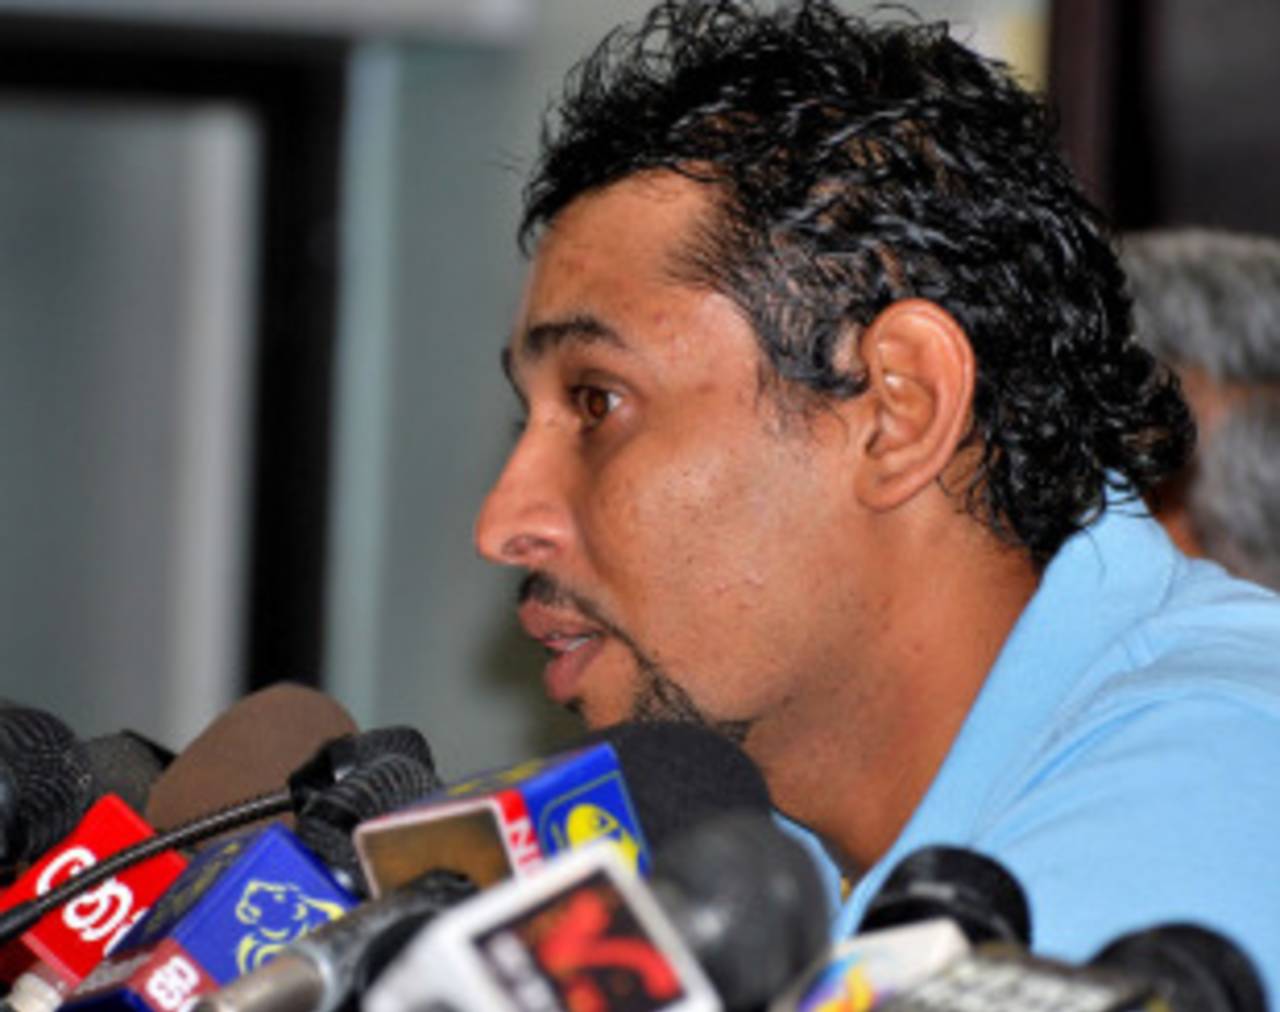 Tillakaratne Dilshan speaks to the press, Colombo, April 20, 2011